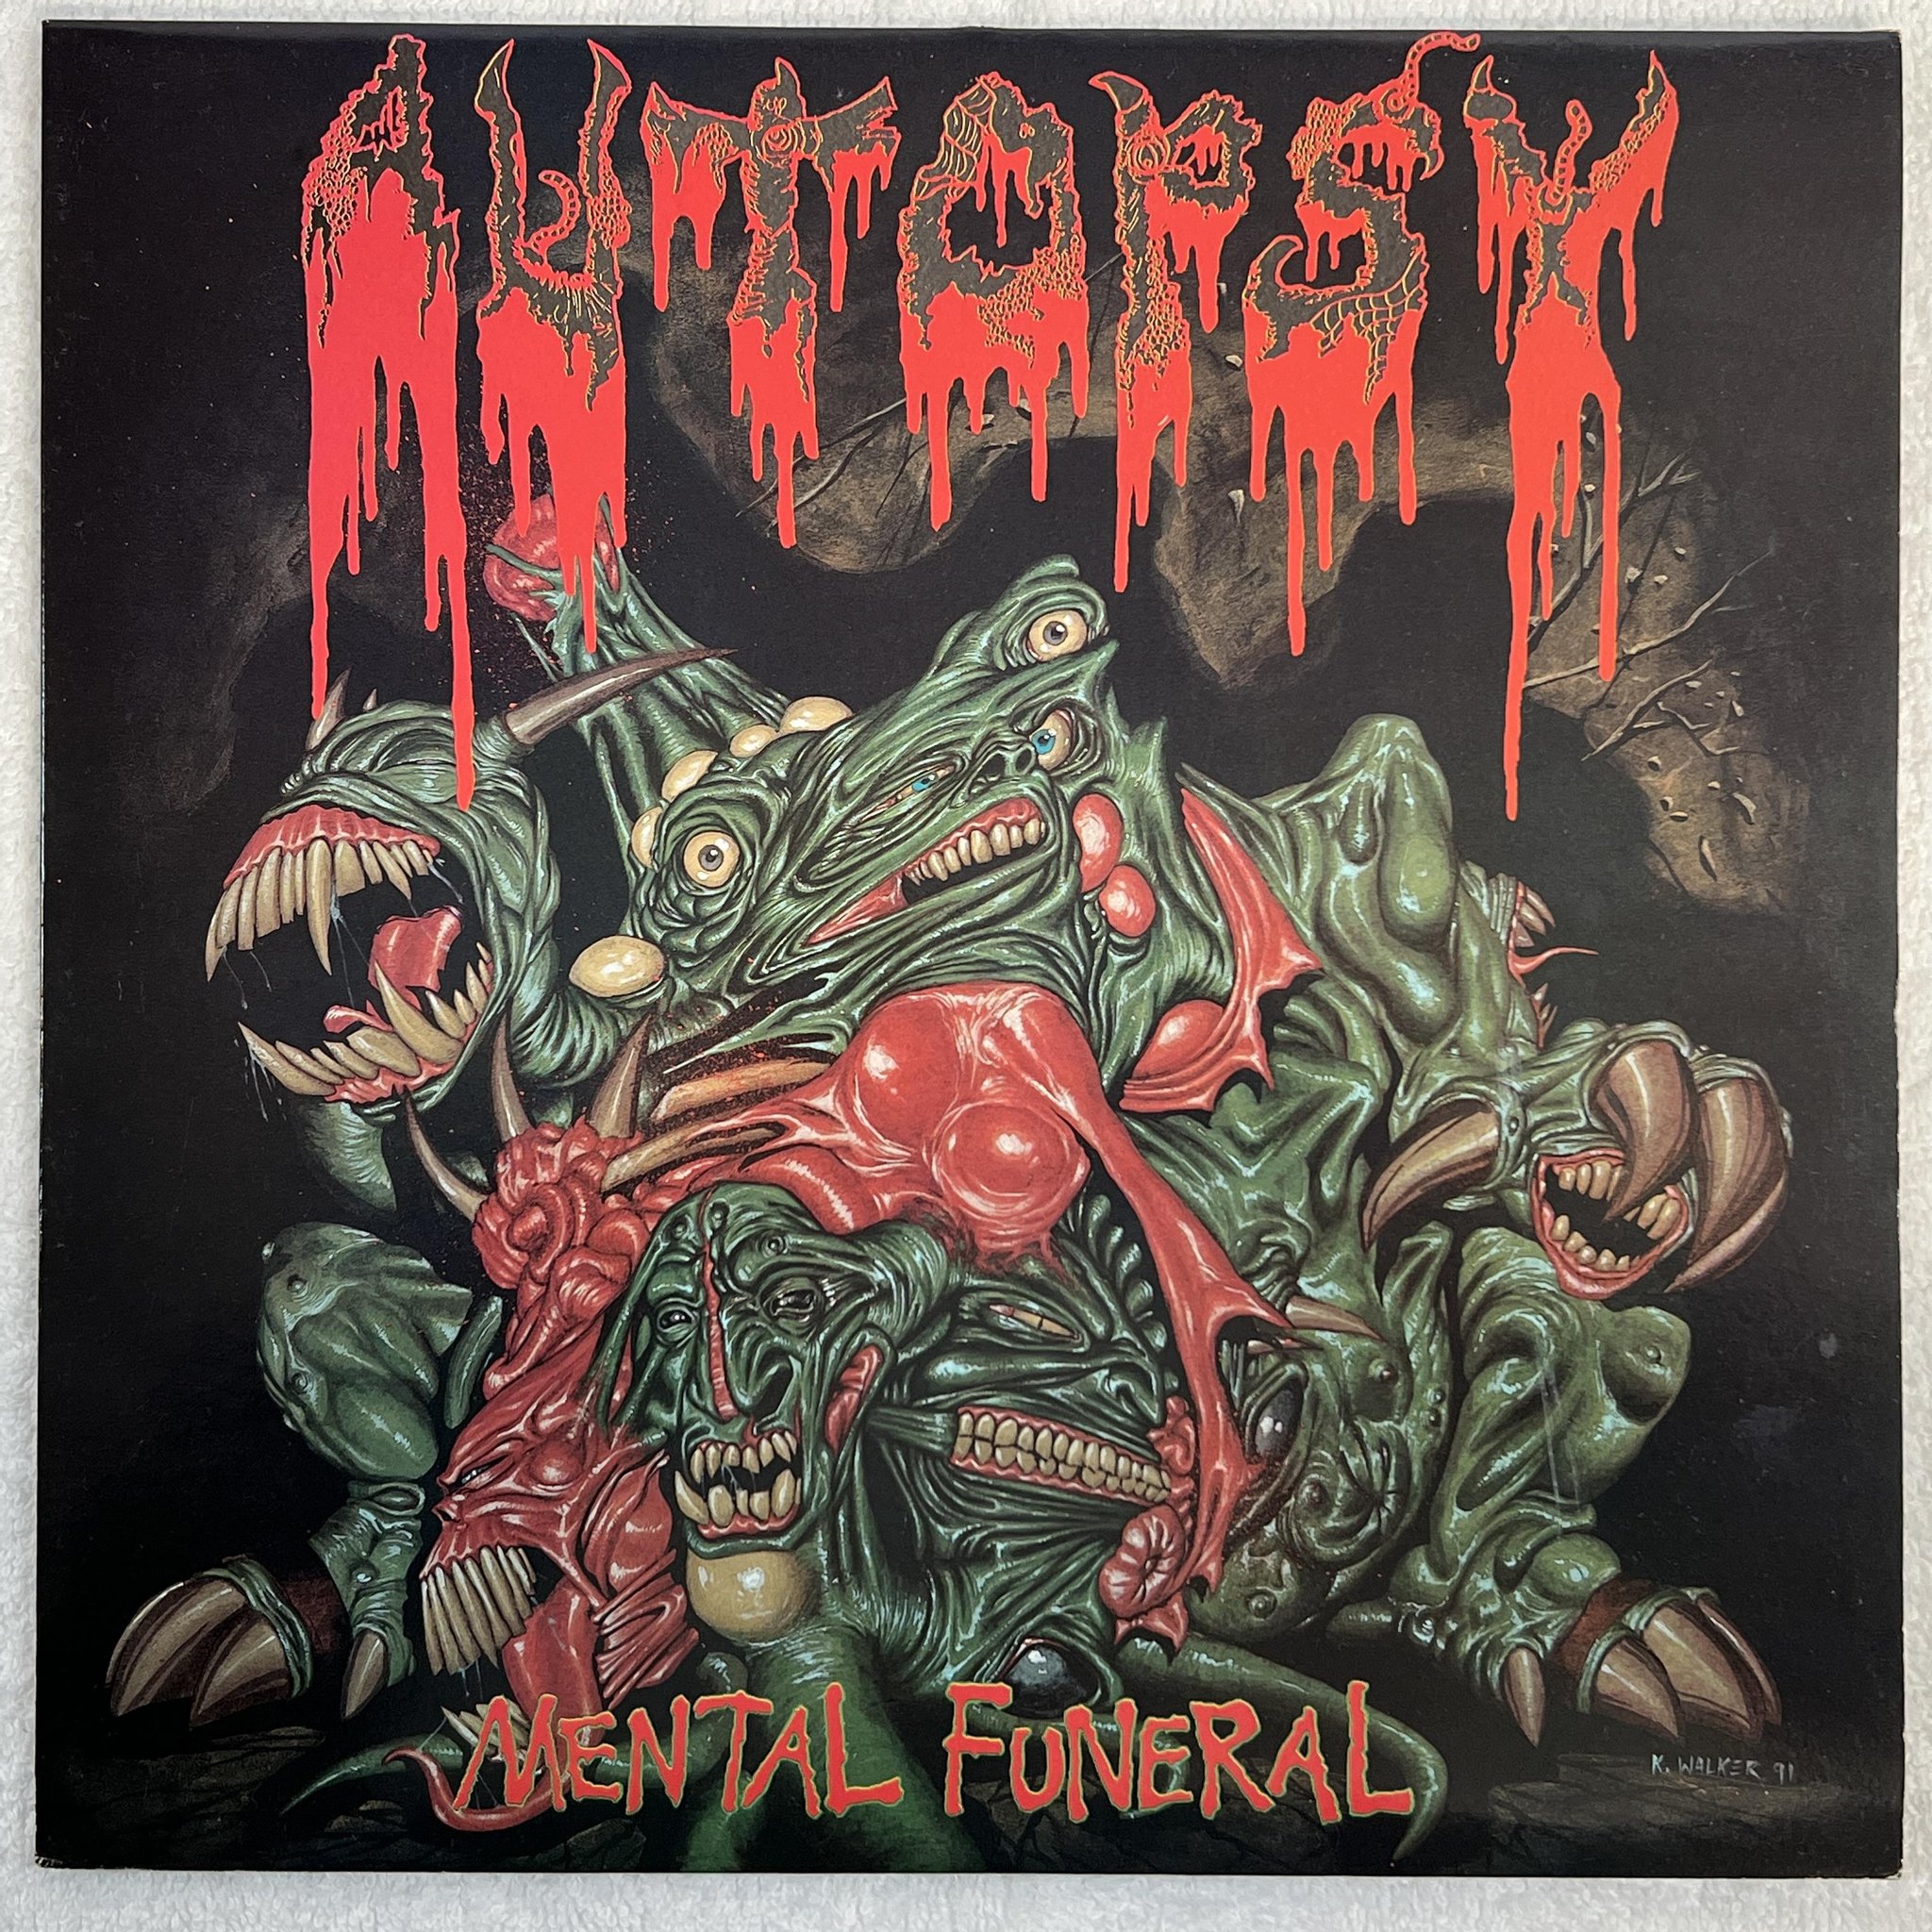 Omslagsbild för skivan AUTOPSY Mental Funeral LP -91 PEACEVILLE VILE 25 *** Rare death metal ***